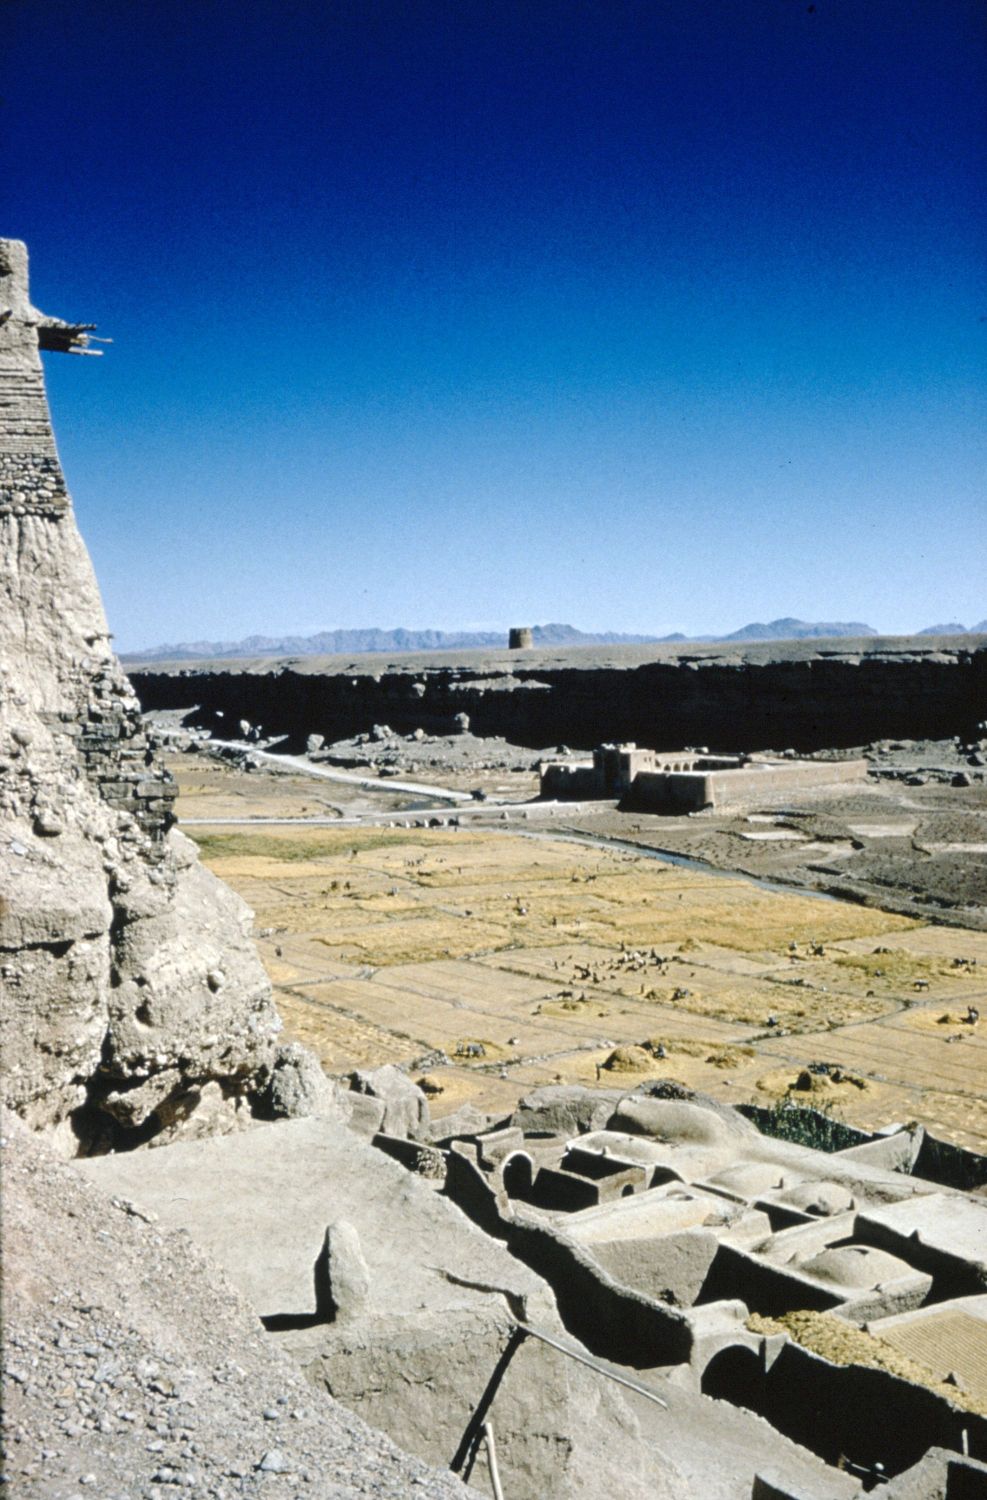 View from citadel of Izadkhvast looking northeast over river valley. The caravanserai of Izadkhvast is visible in background.